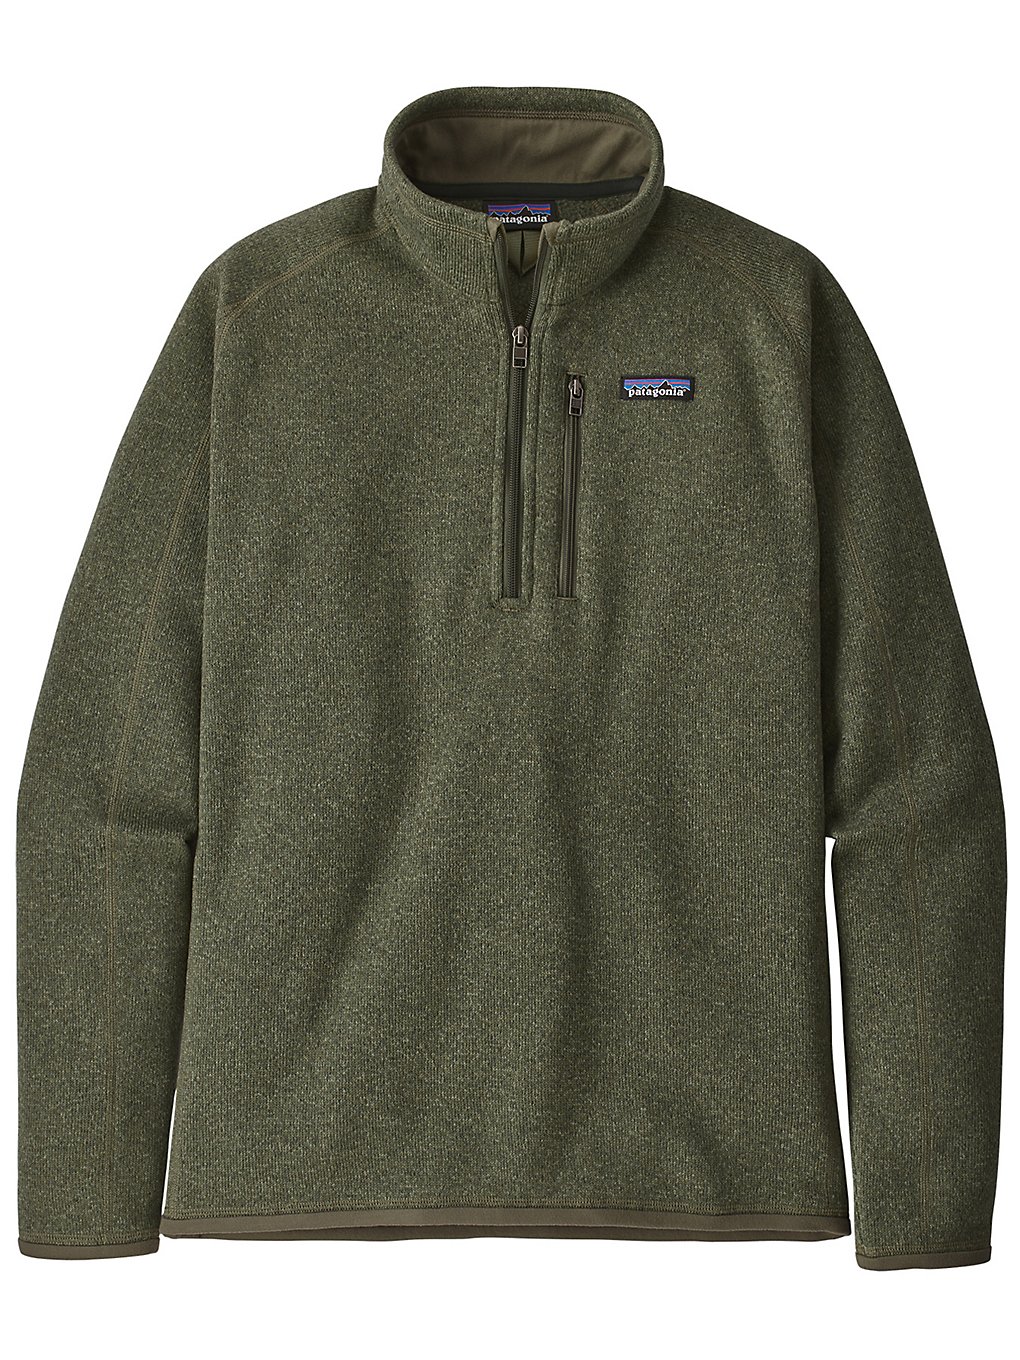 patagonia better 1/4 zip sweater industrial green